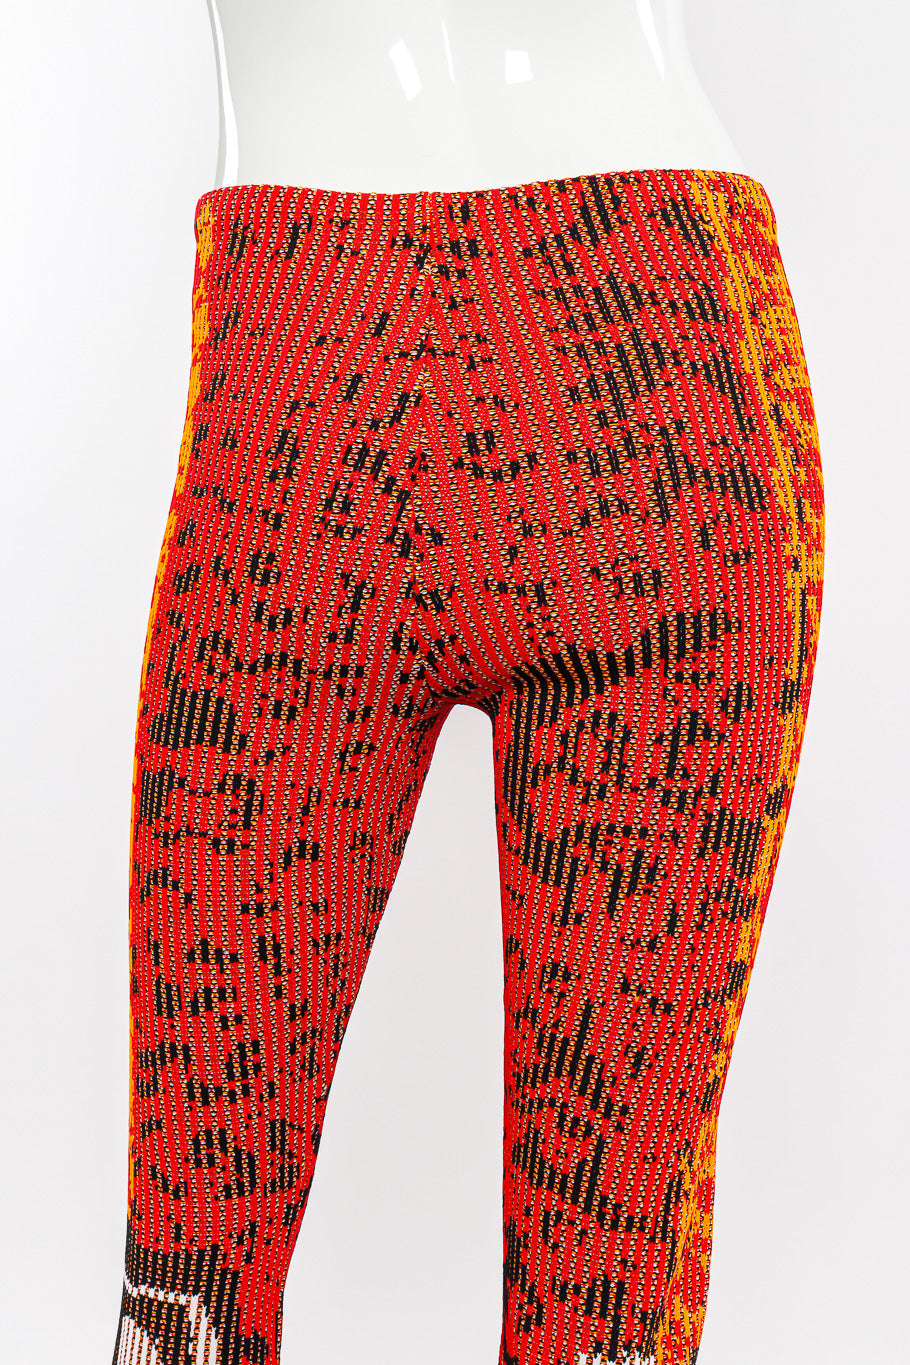 Rudi Gernreich 2018 F/W Graphic Knit Pant back view on mannequin closeup @Recessla